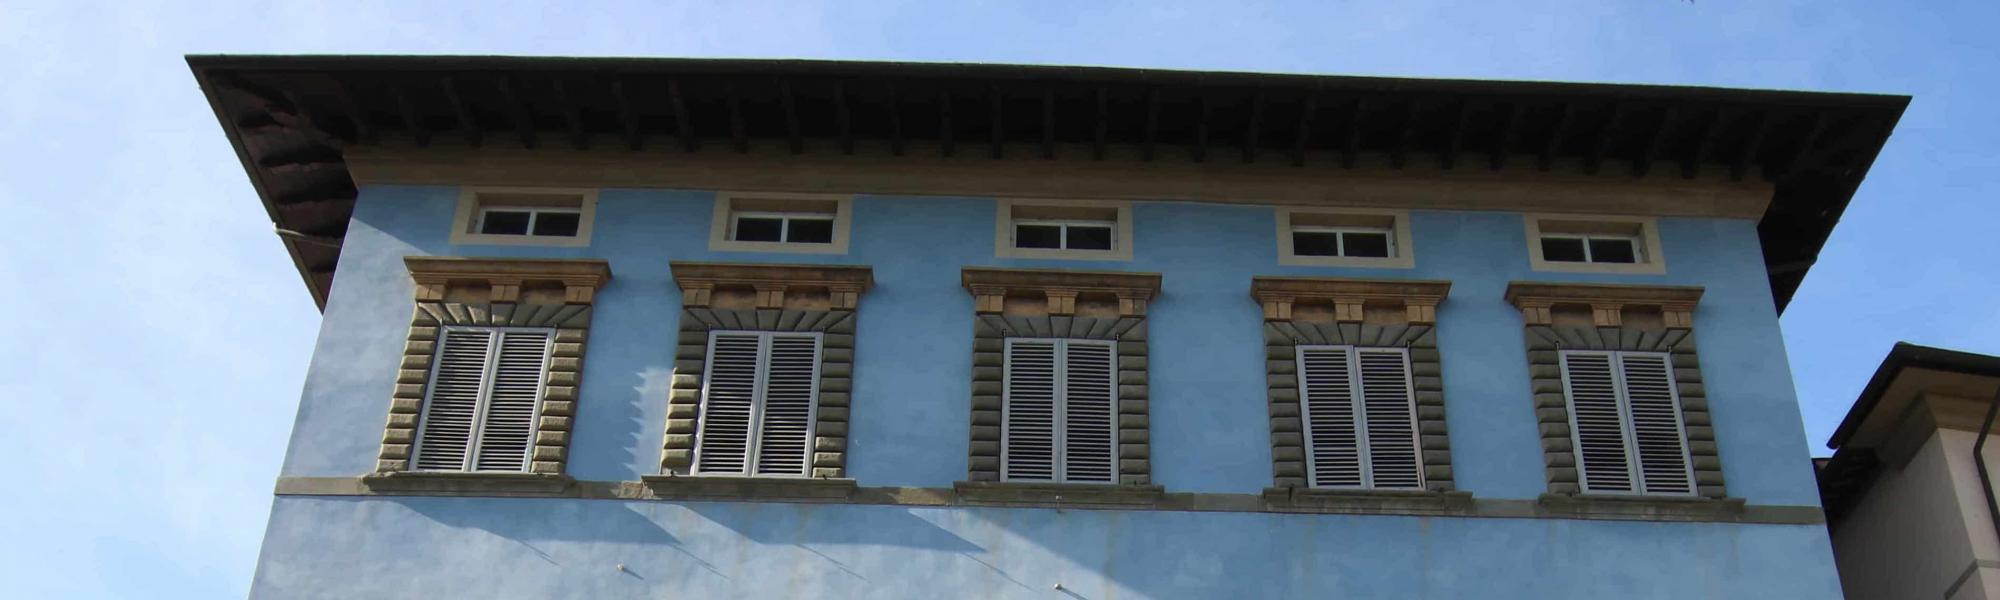 Palazzo Giuli-Rosselmini-Gualandi _ Palazzo Blu 